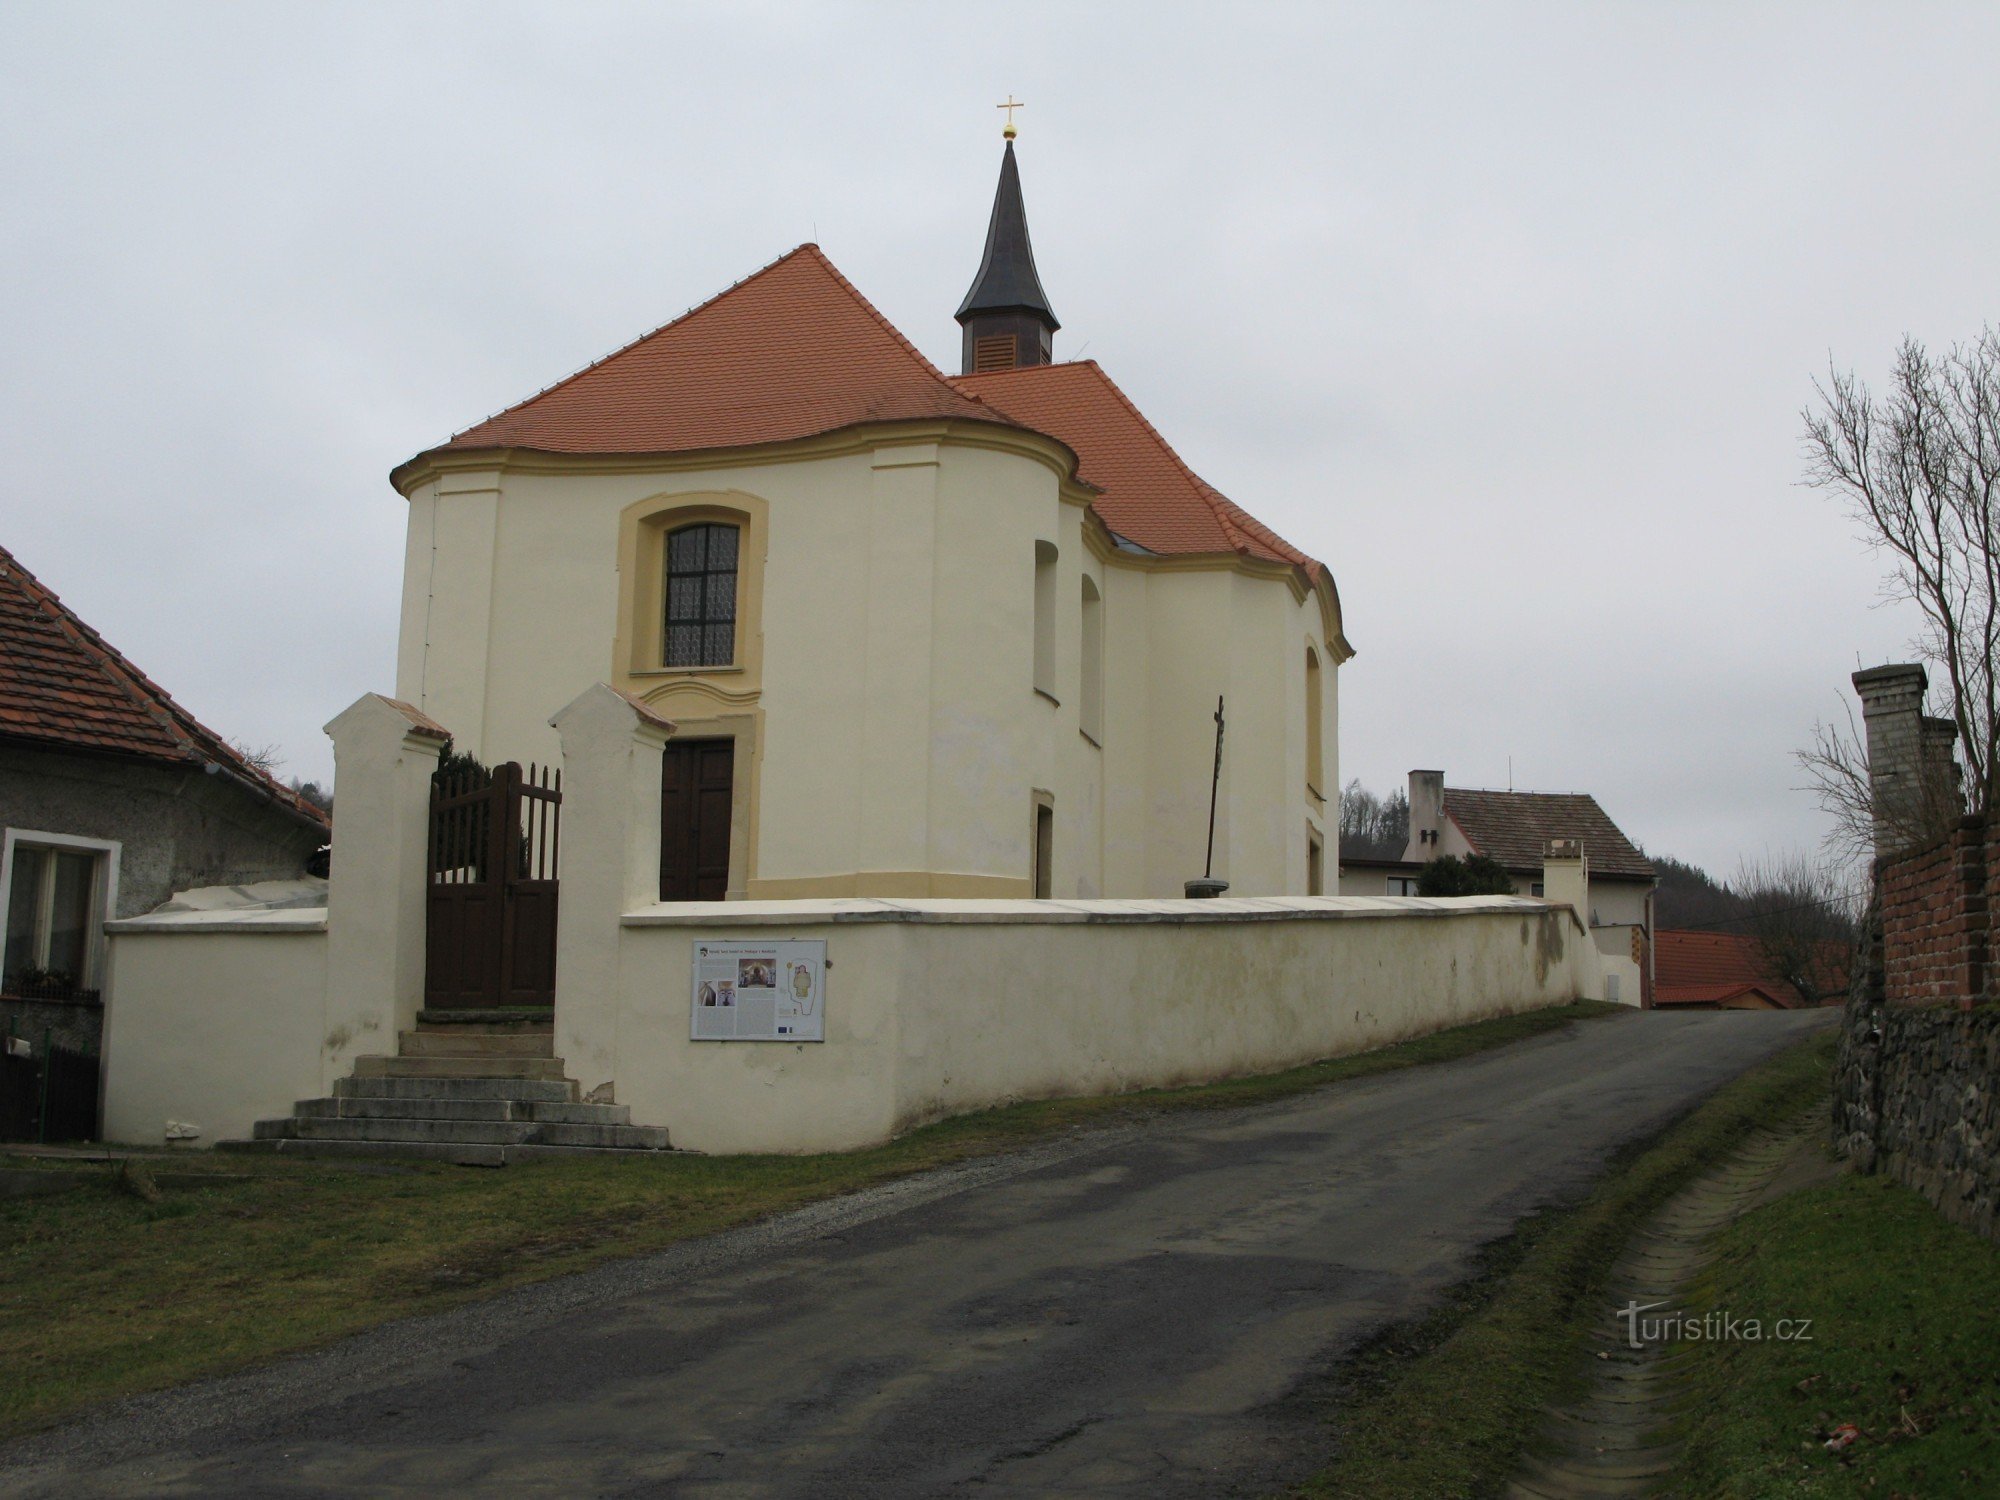 Nezdice - Kirche St. ausgraben